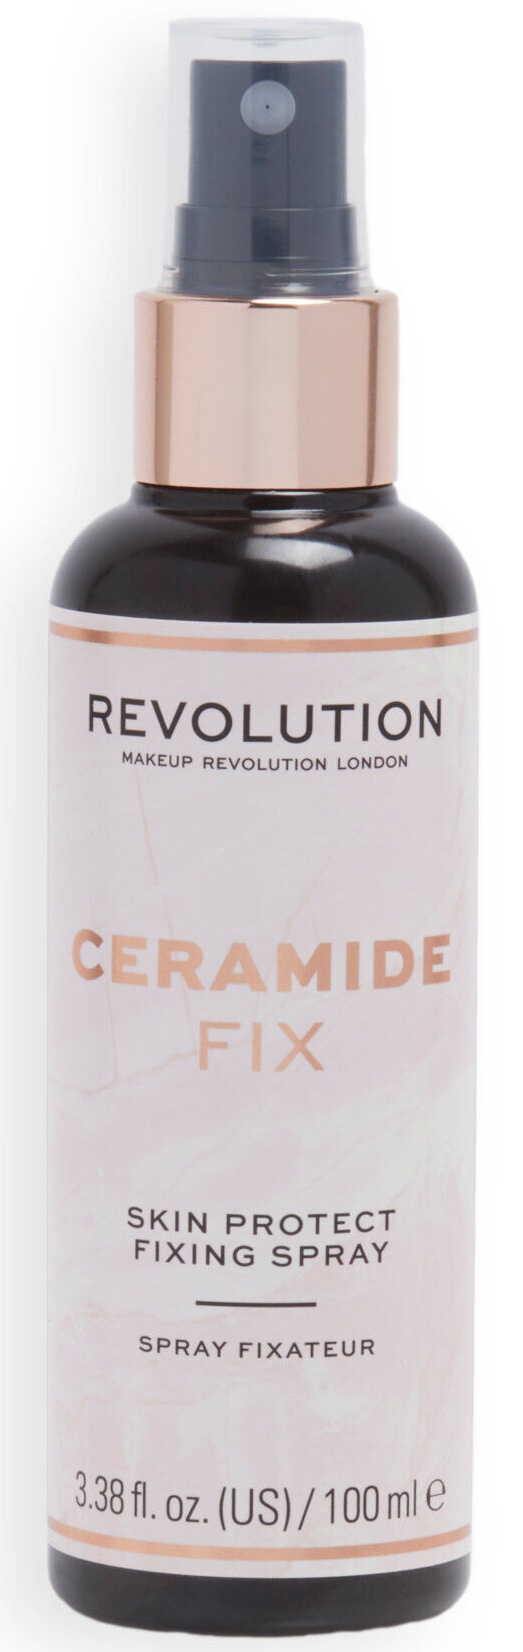 Revolution Ceramide Fix Skin Protect Fixing Spray